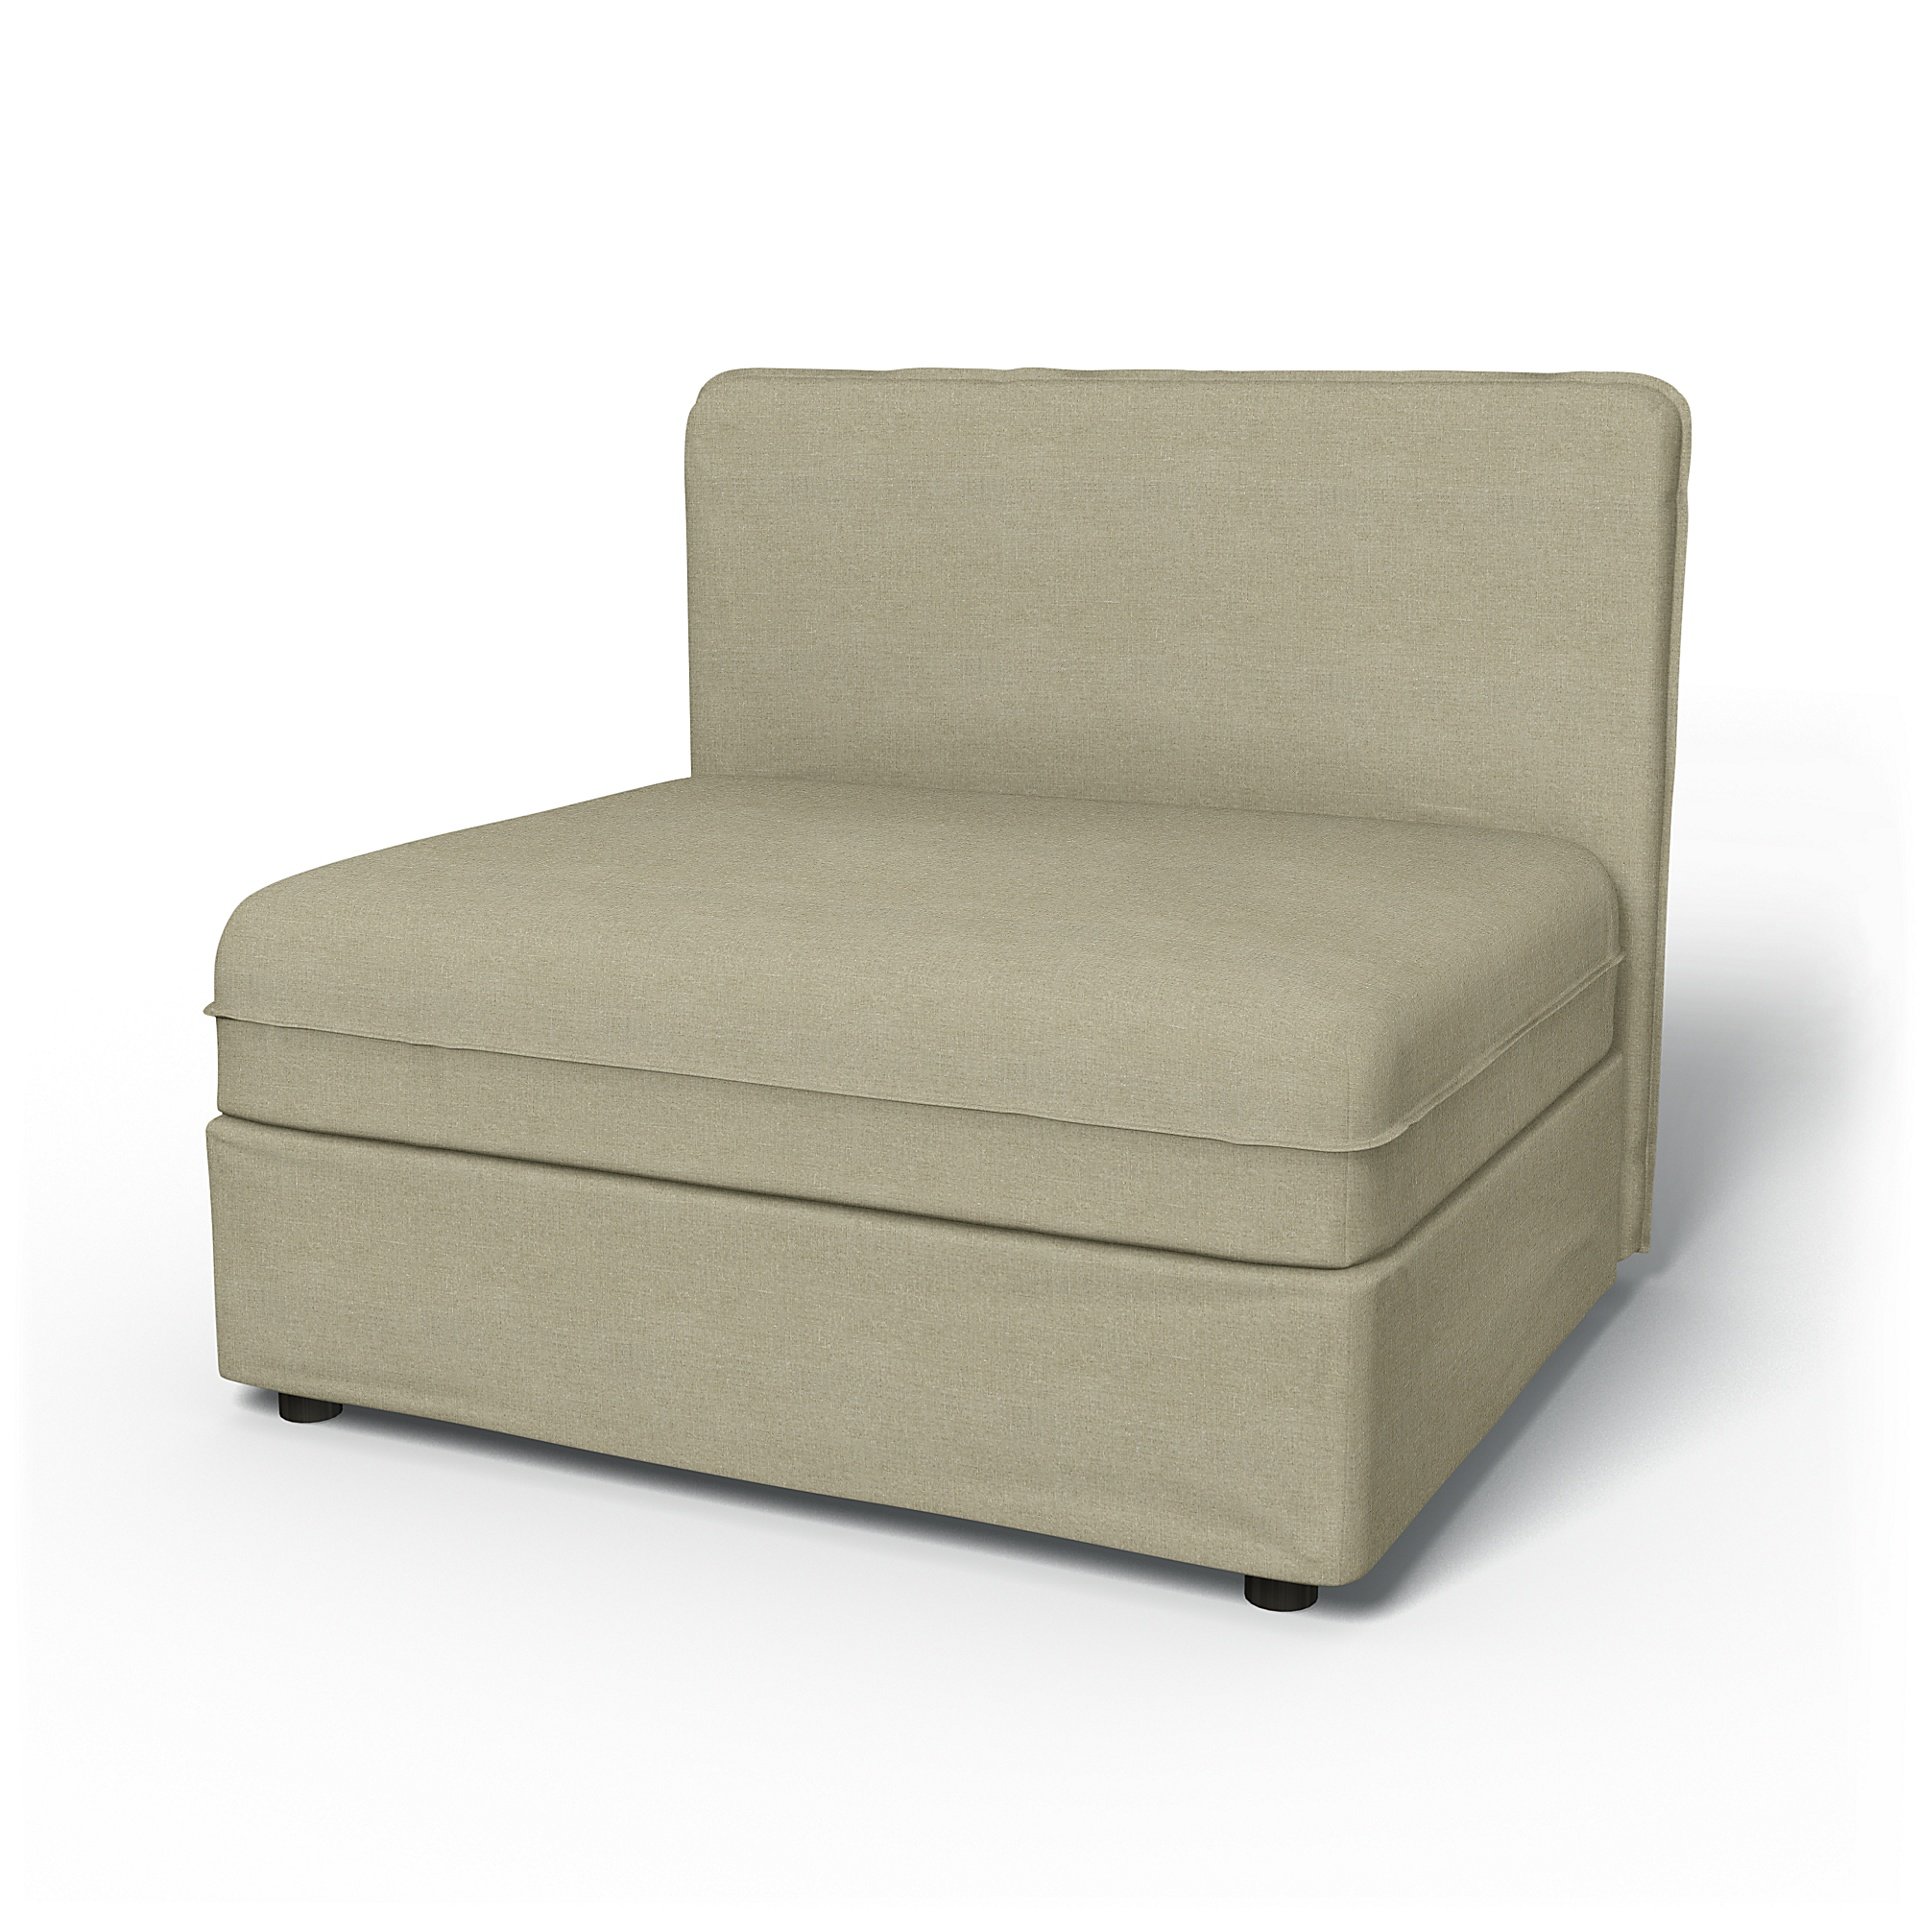 IKEA - Vallentuna Seat Module with Low Back Cover 100x80cm 39x32in, Pebble, Linen - Bemz